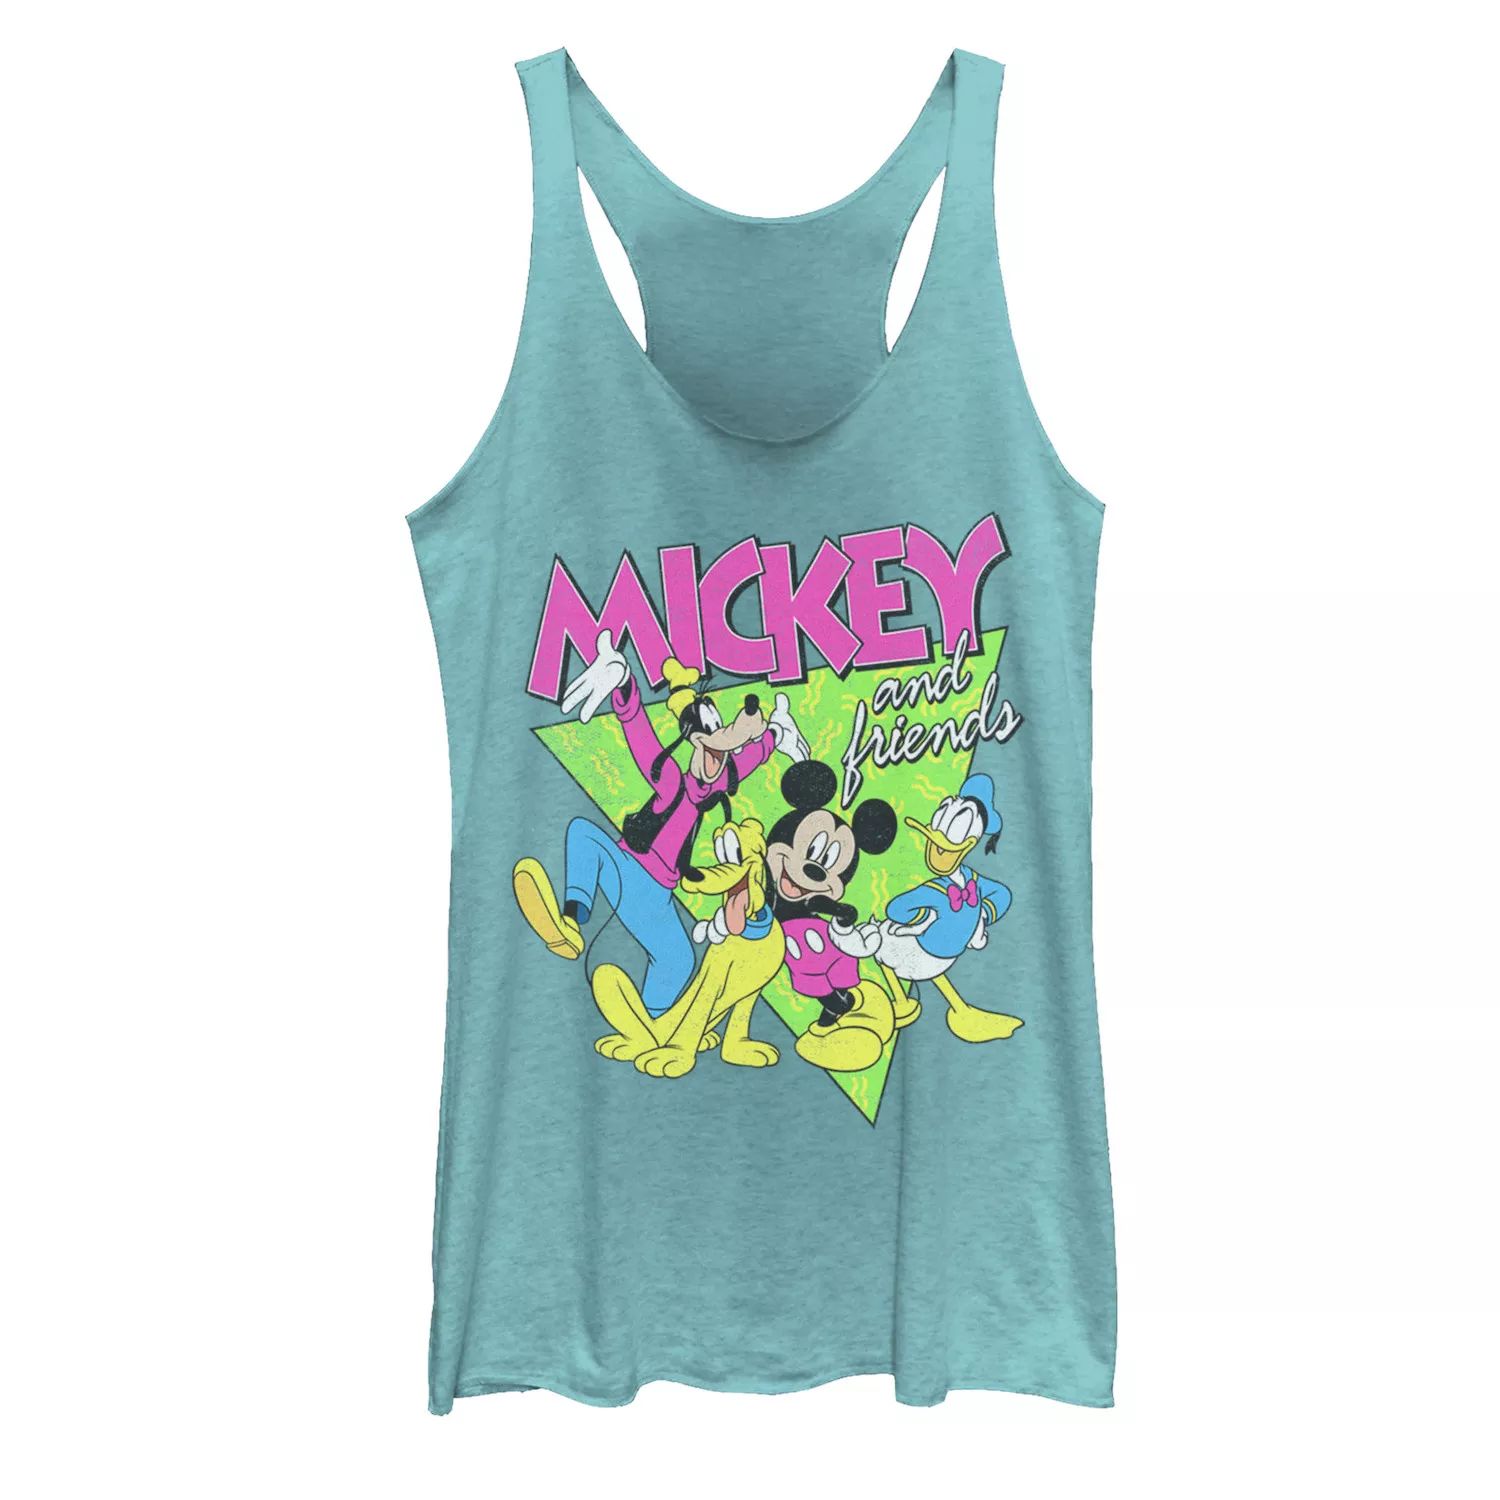 Майка «Друзья 90-х» Disney с Микки Маусом для юниоров Licensed Character майка с микки маусом disney mickey для юниоров в стиле 90 х годов licensed character